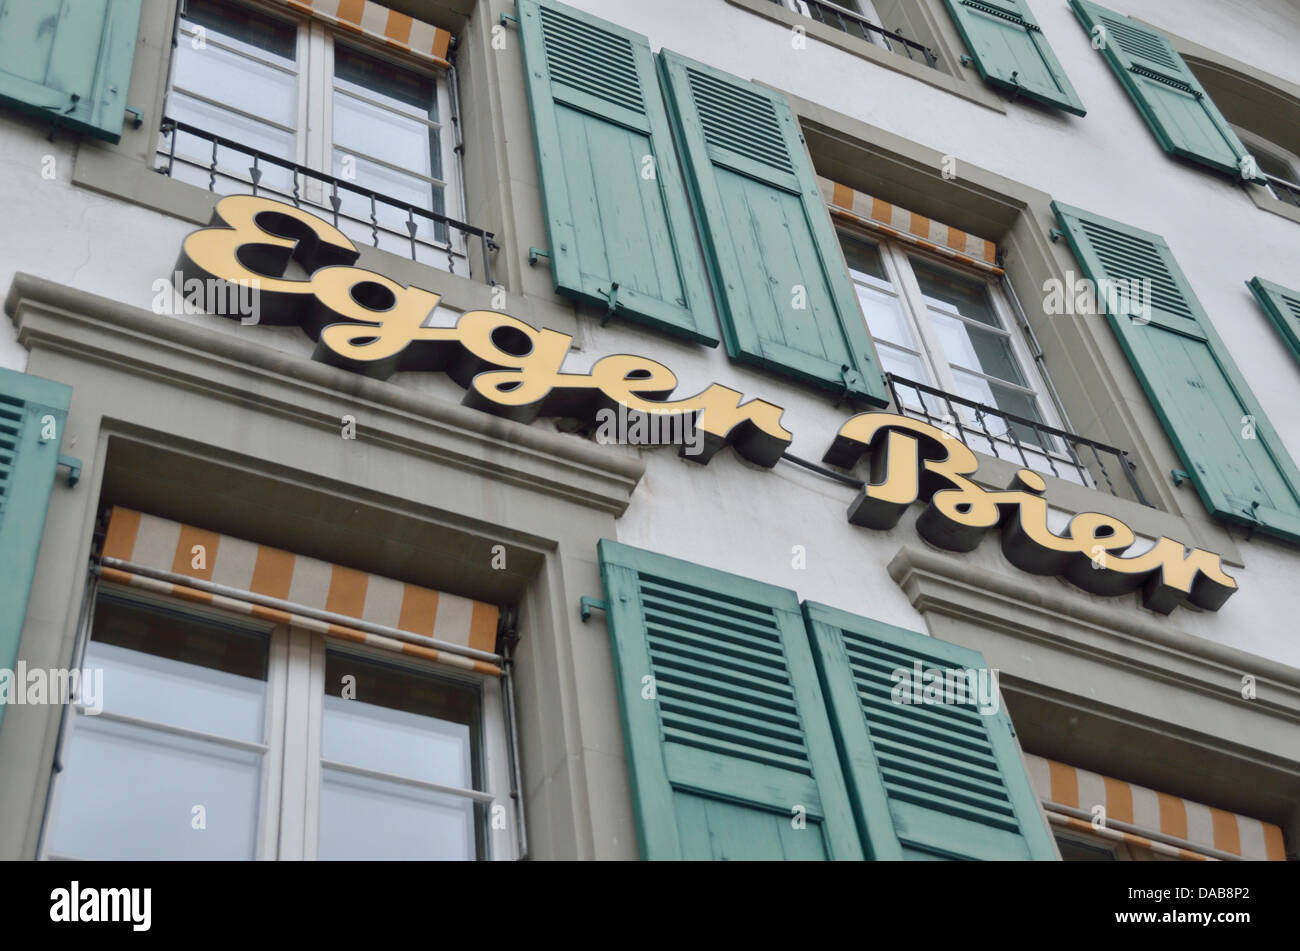 Egger Bier sign outside a bar in Bern, Switzerland Stock Photo